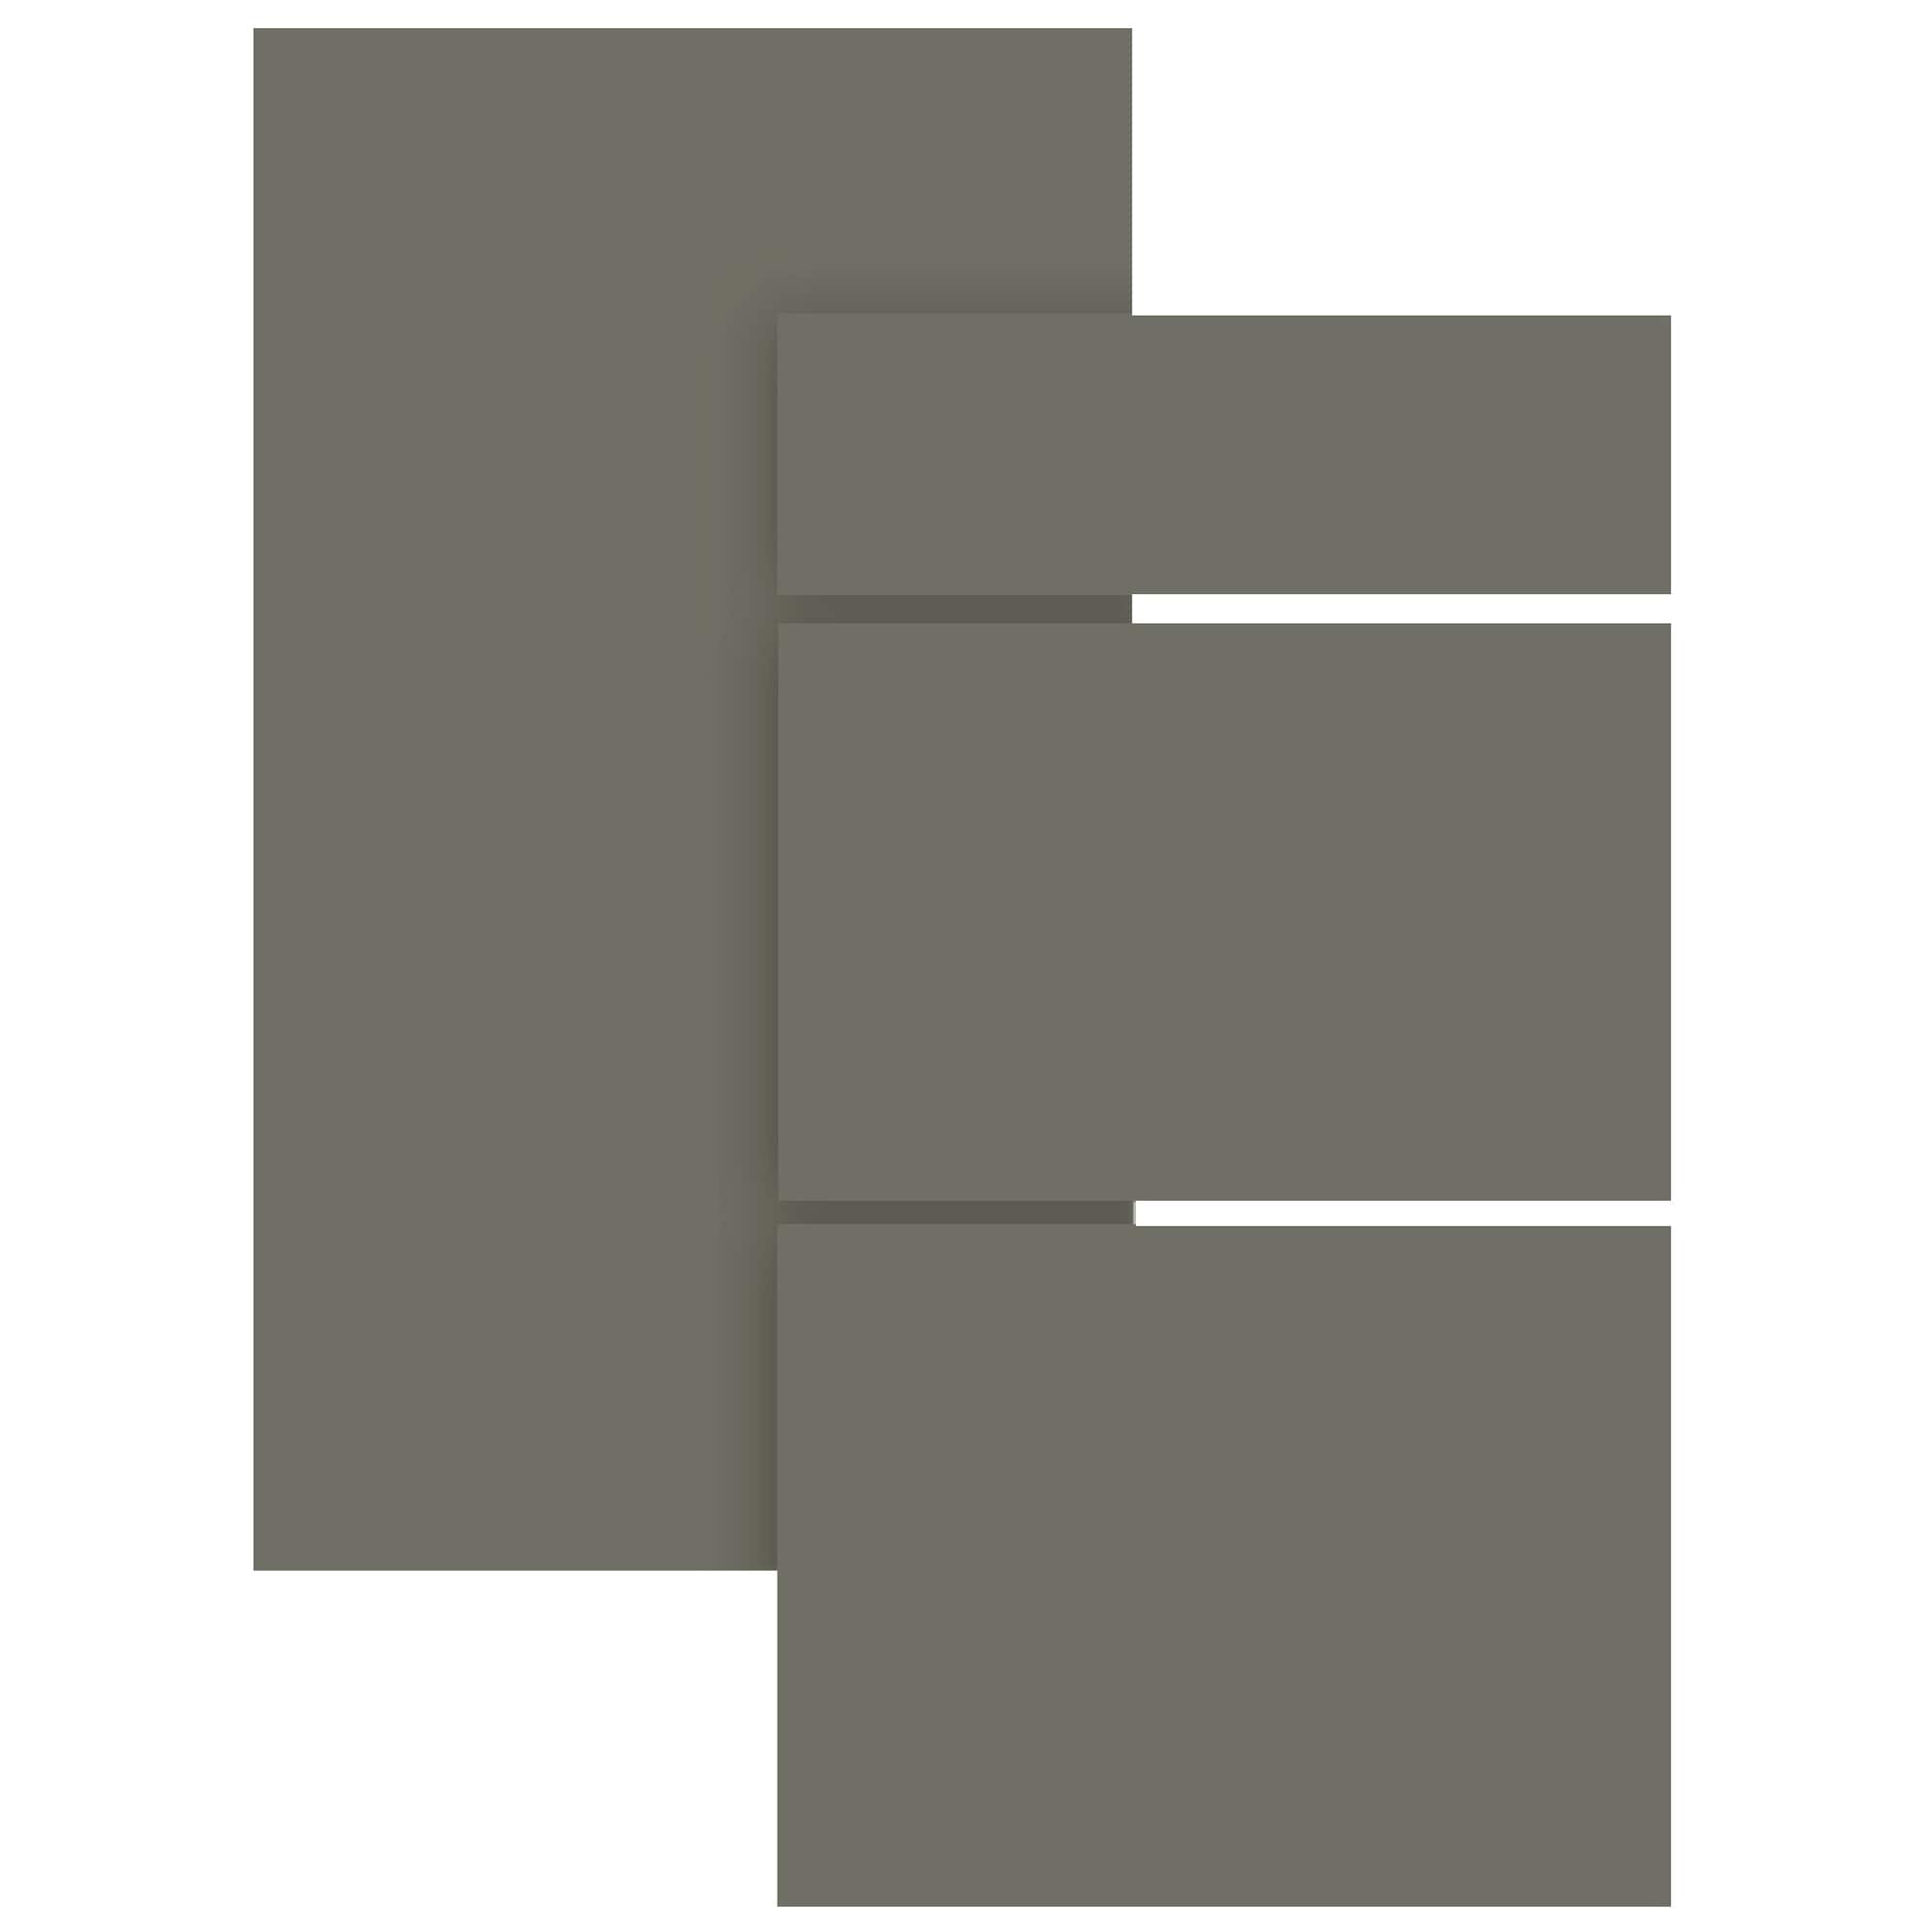 Epoq Trend Warm Grey vægpanel 233 cm